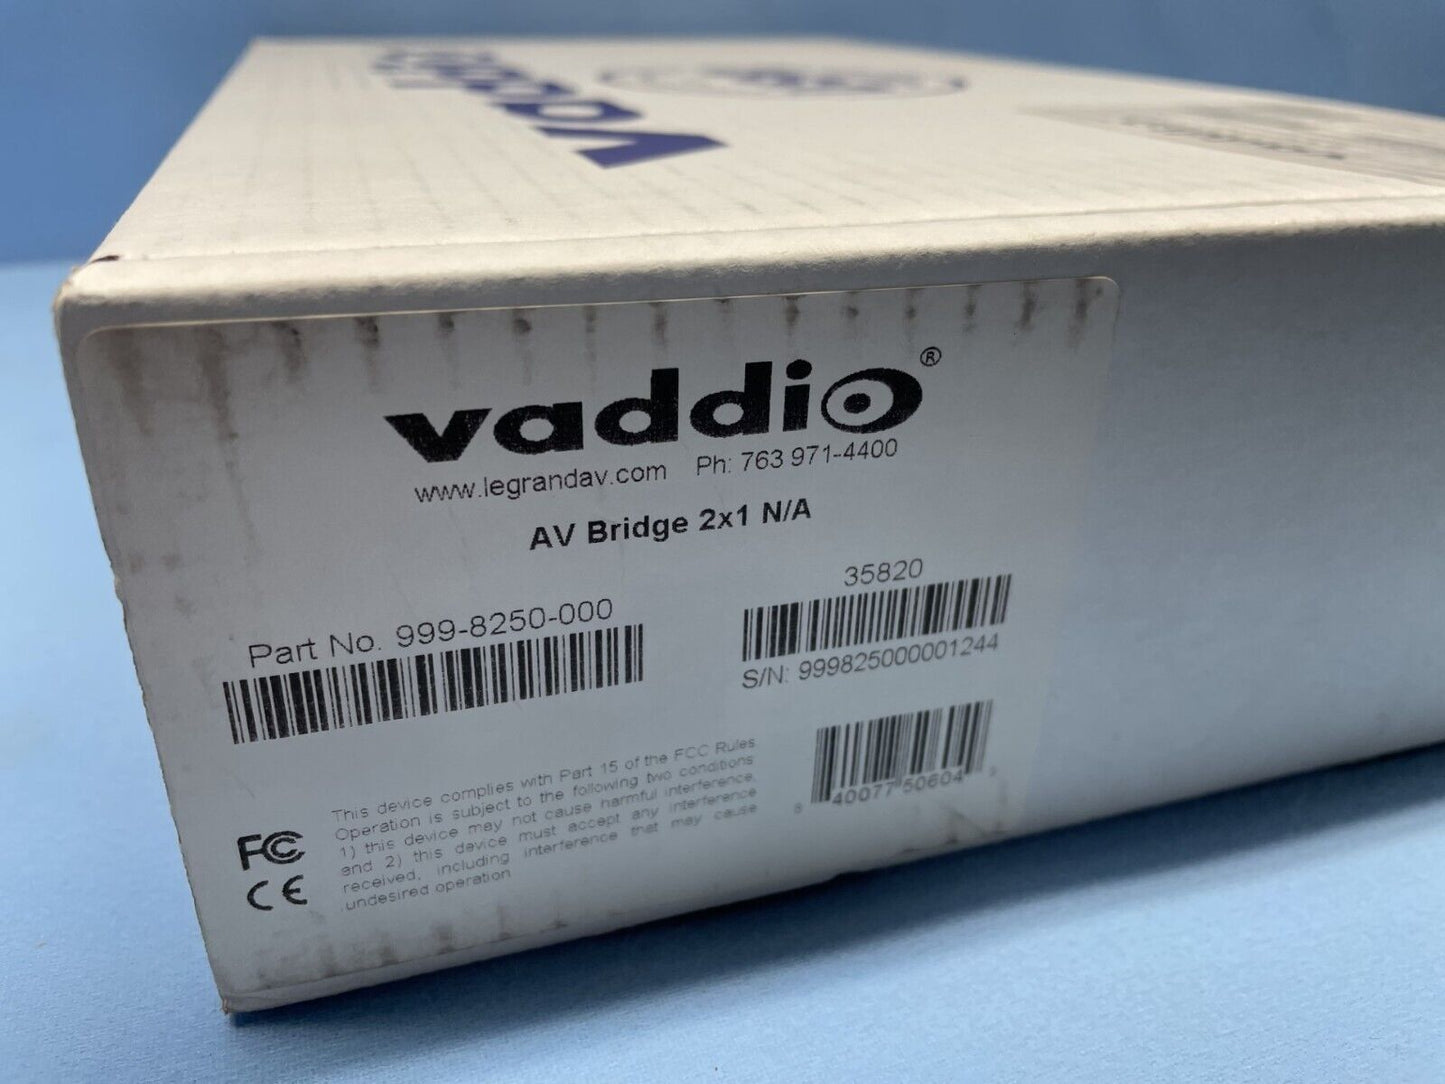 Vaddio AV Bridge 2x1 Lecture Capture Device 999-8250-000